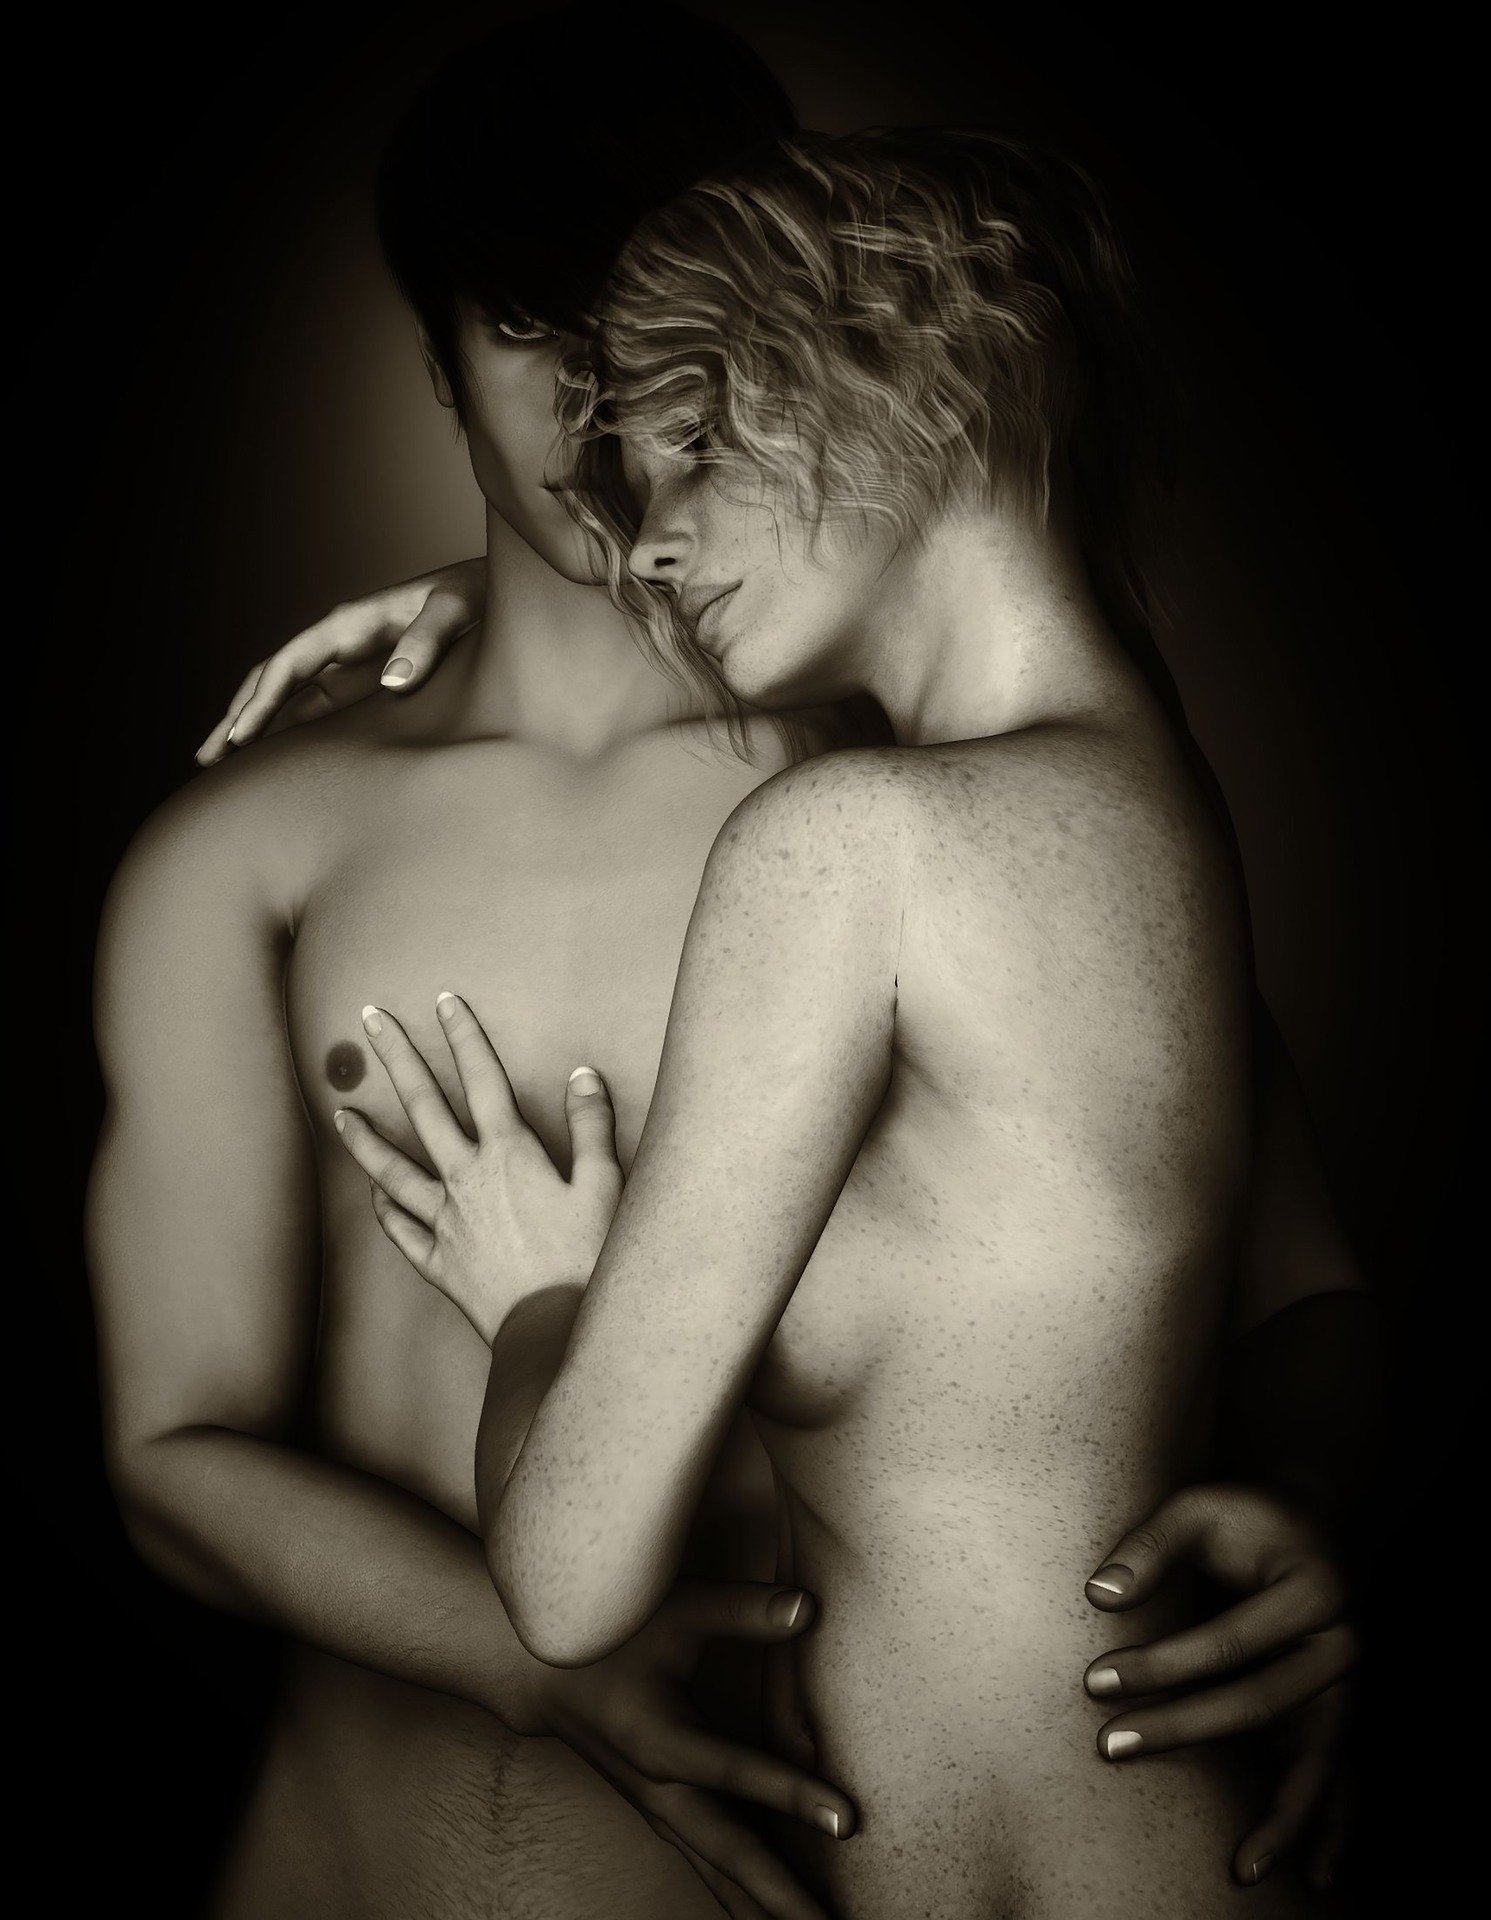 Naked couple embracing